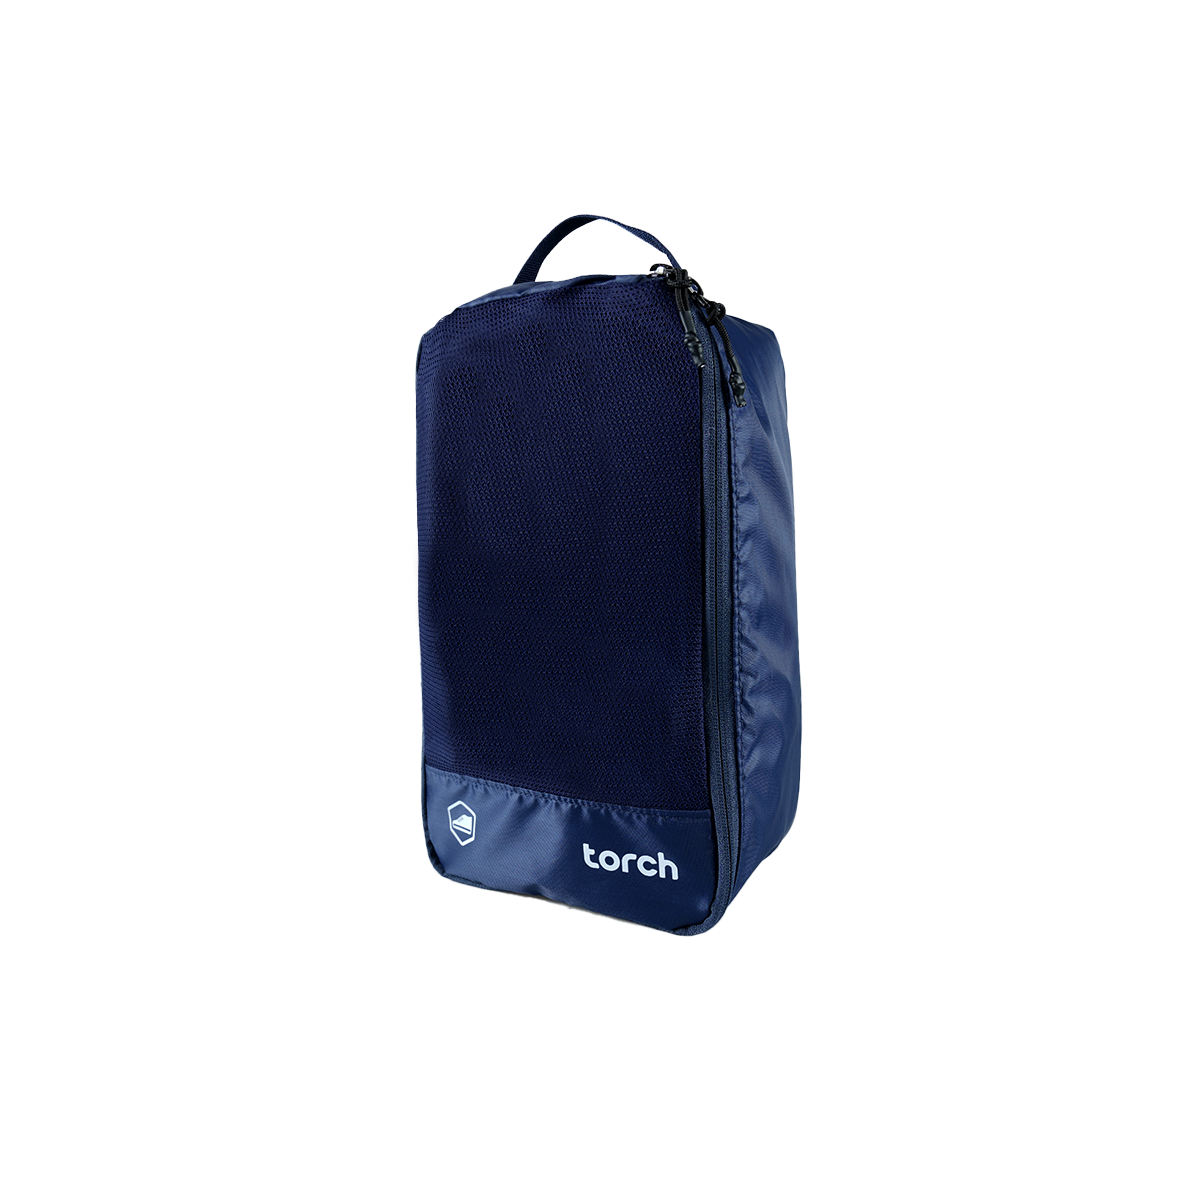 Paket Traveling - Kanzaki Light Travel Backpack Gratis Dafi Shoe Pack + Dafi Cloth Pack L + Dafi Multi Pouch M